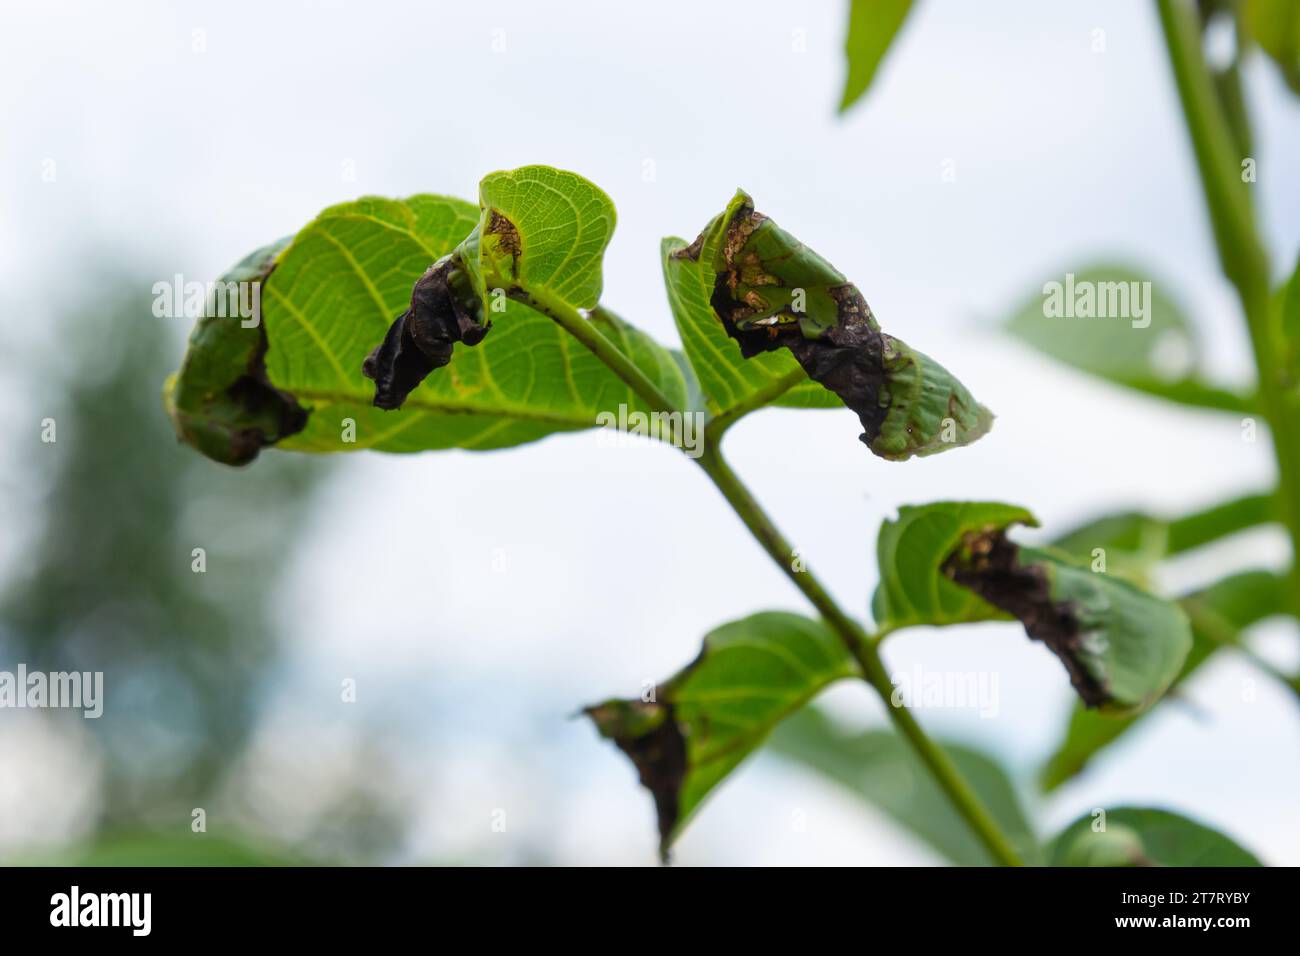 Walnut anthracnose or walnut black spot - Gnomonia, Ophiognomonia leptostyla, fungal plant pathogen. Stock Photo